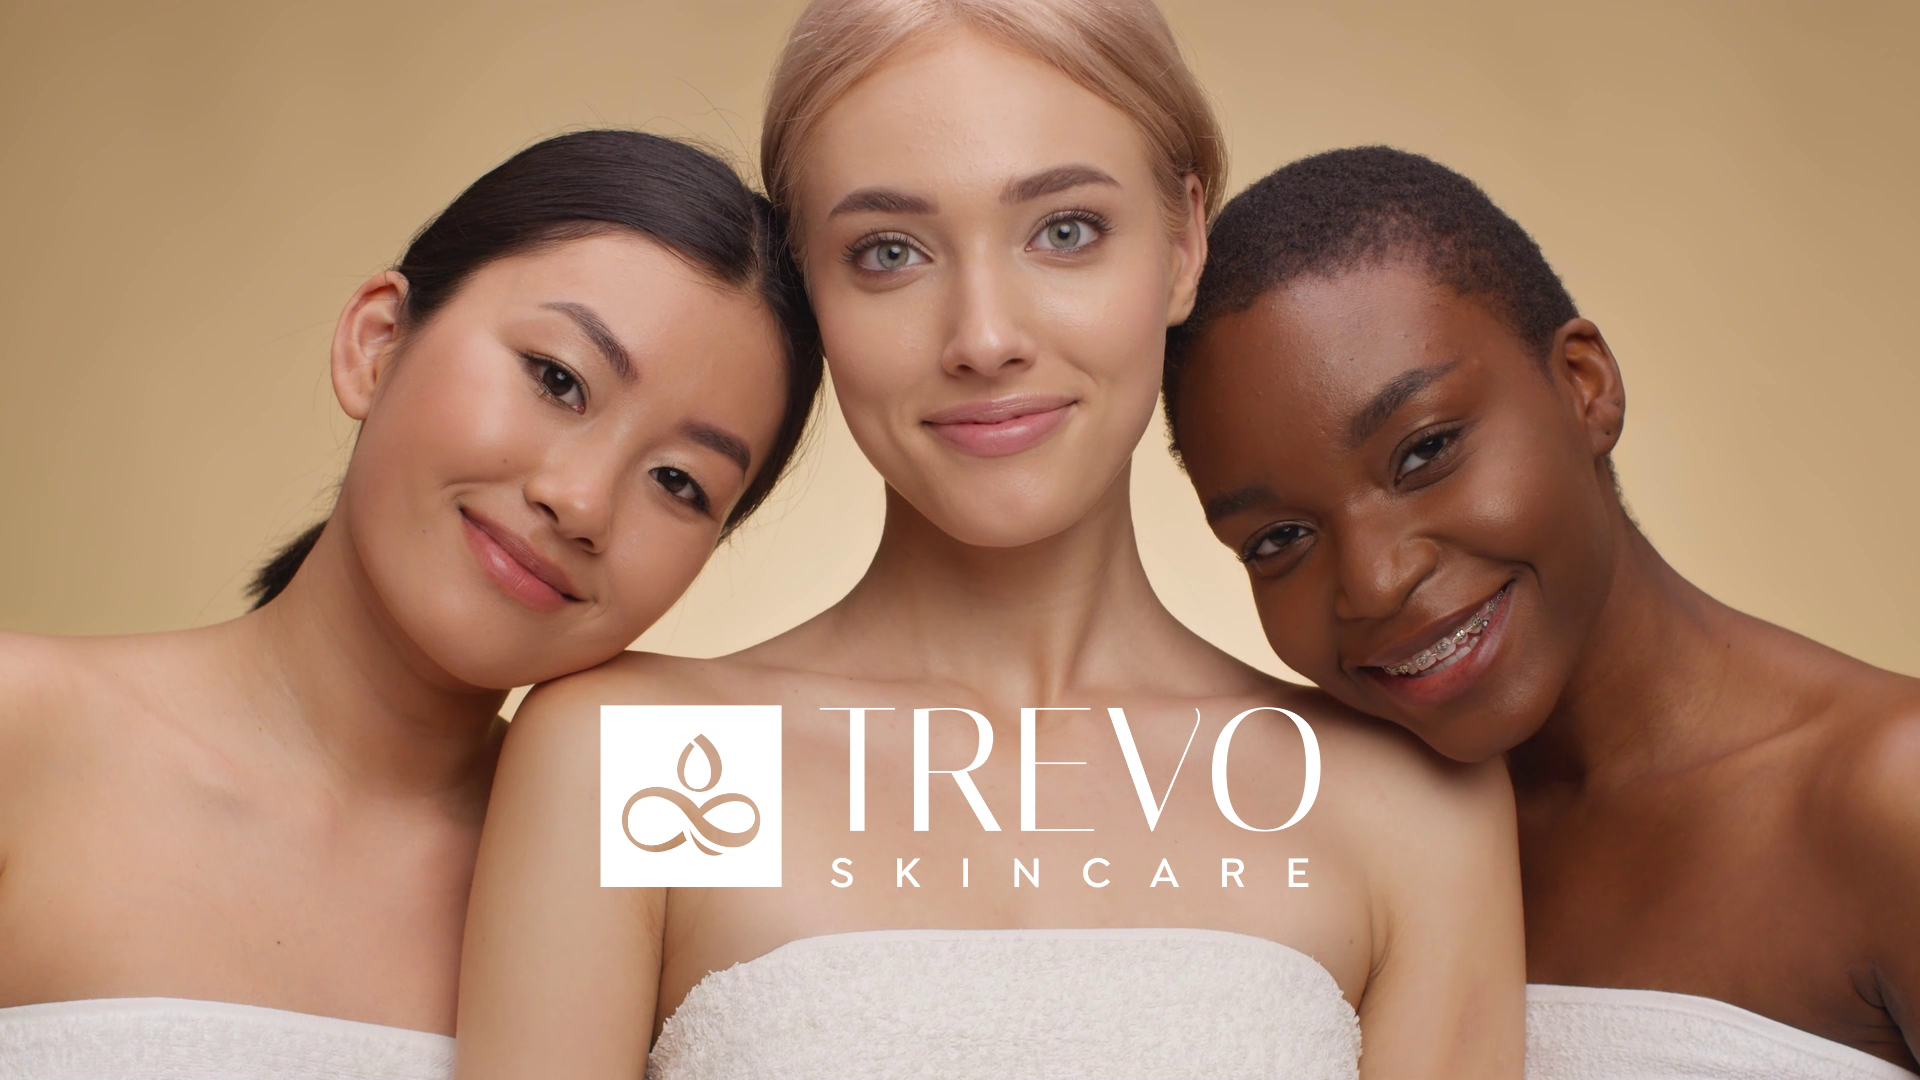 Load video: Introducing Trevo Skincare